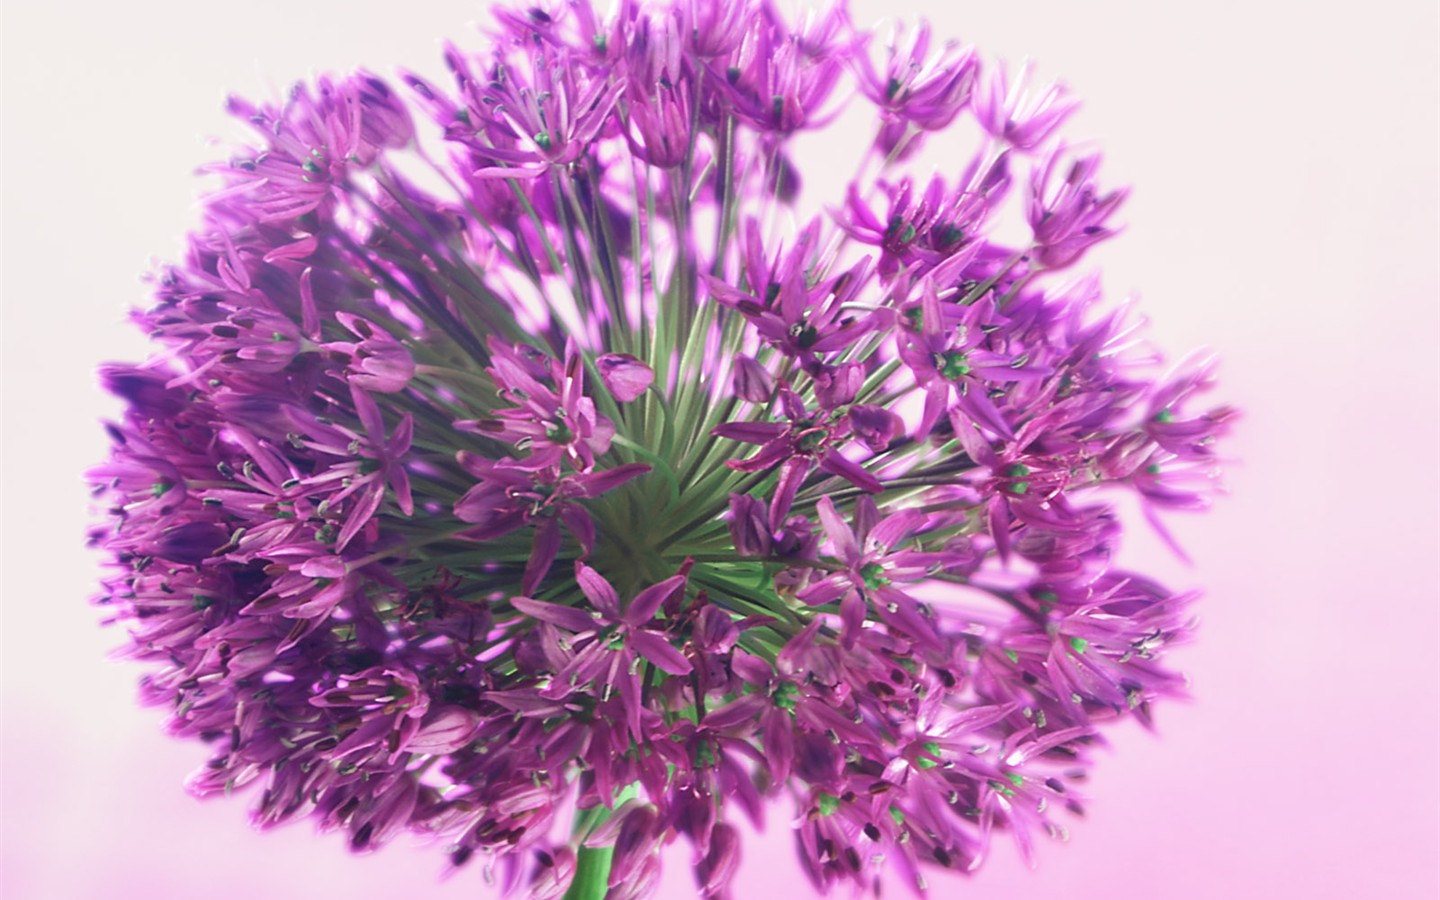 Flowers close-up (2) #17 - 1440x900